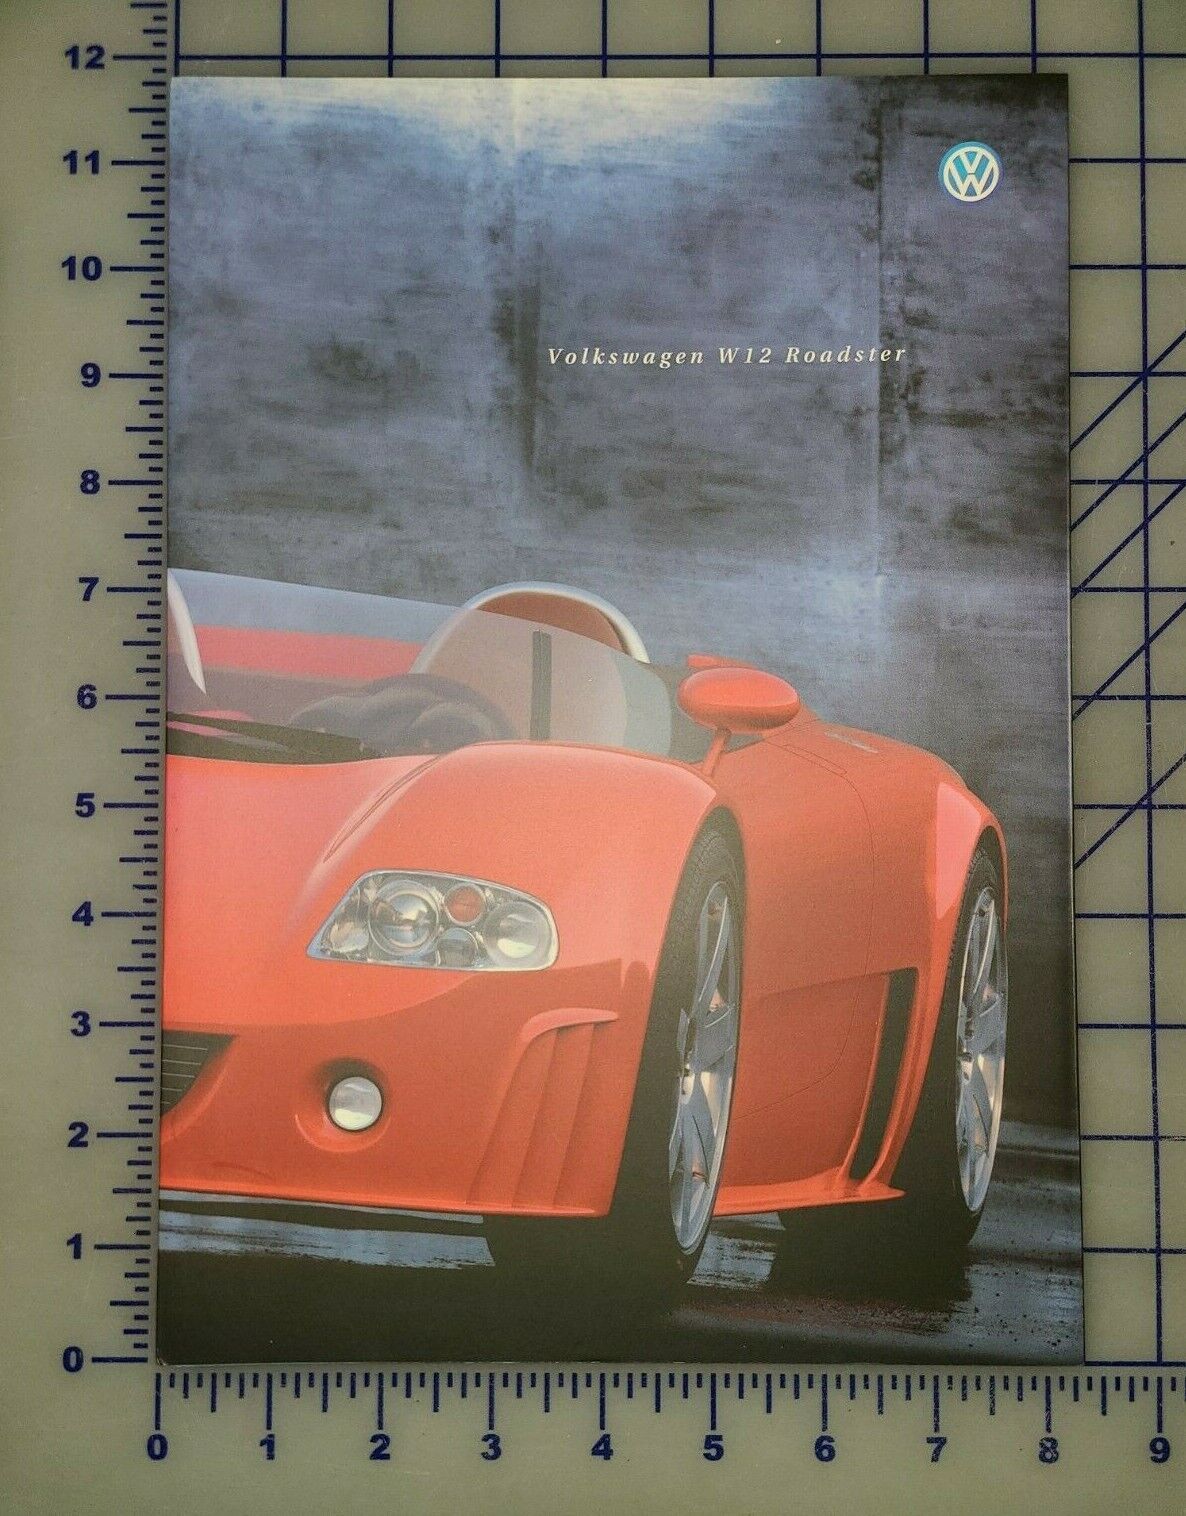 1998 Volkswagen Roadster W12 Supercar Concept Brochure Folder 